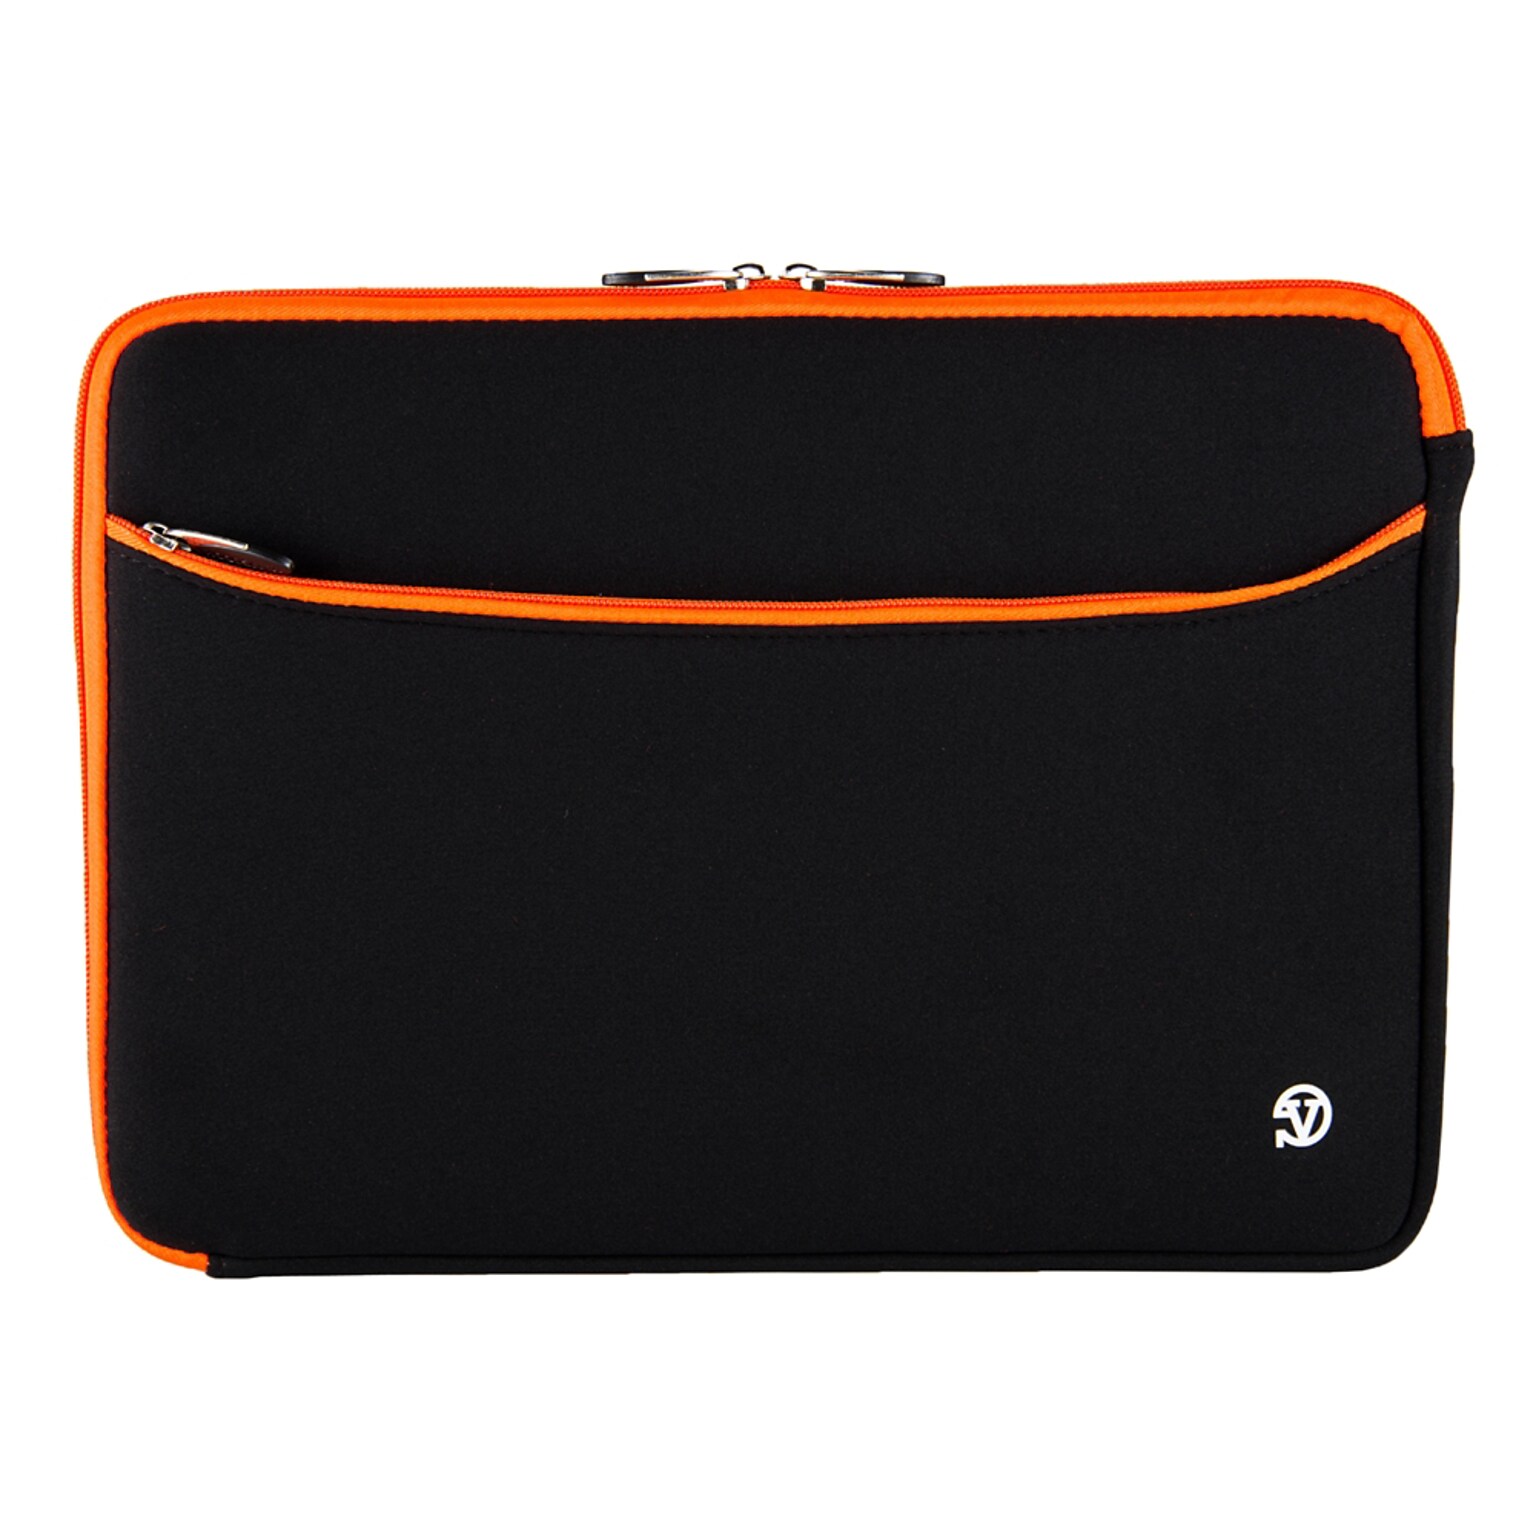 Vangoddy Neoprene Laptop Carrying Sleeve Fits up to 13 Laptops (Black with Orange Trim)